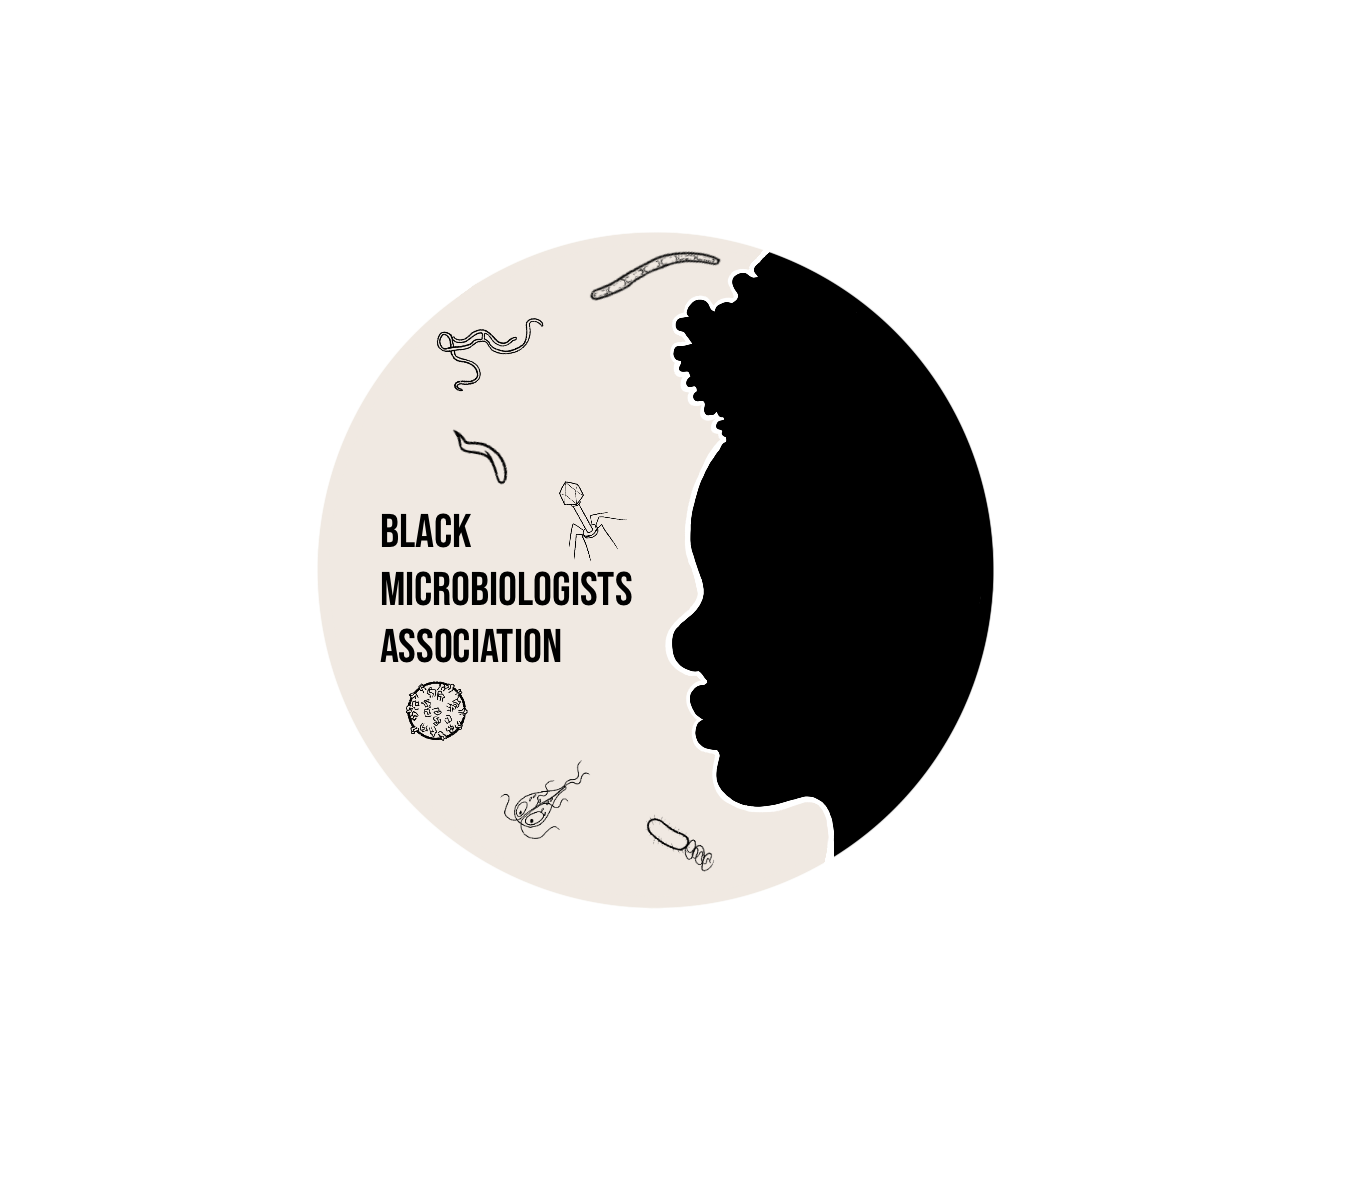 Black Microbiologists Association